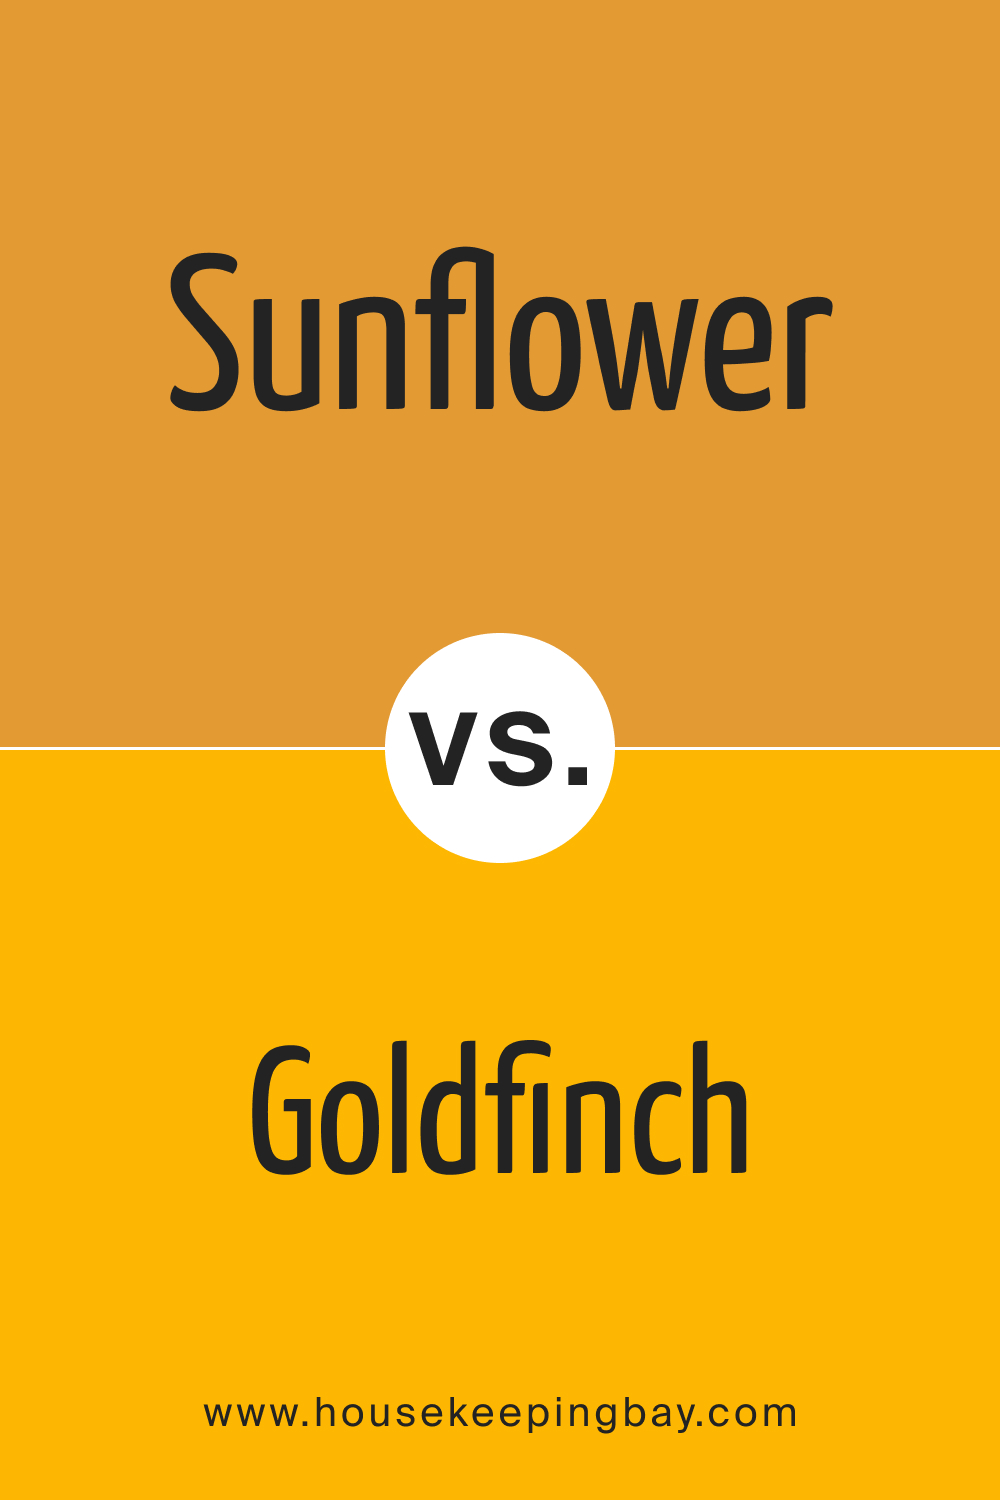 Sunflower SW 6678 vs SW 6905 Goldfinch